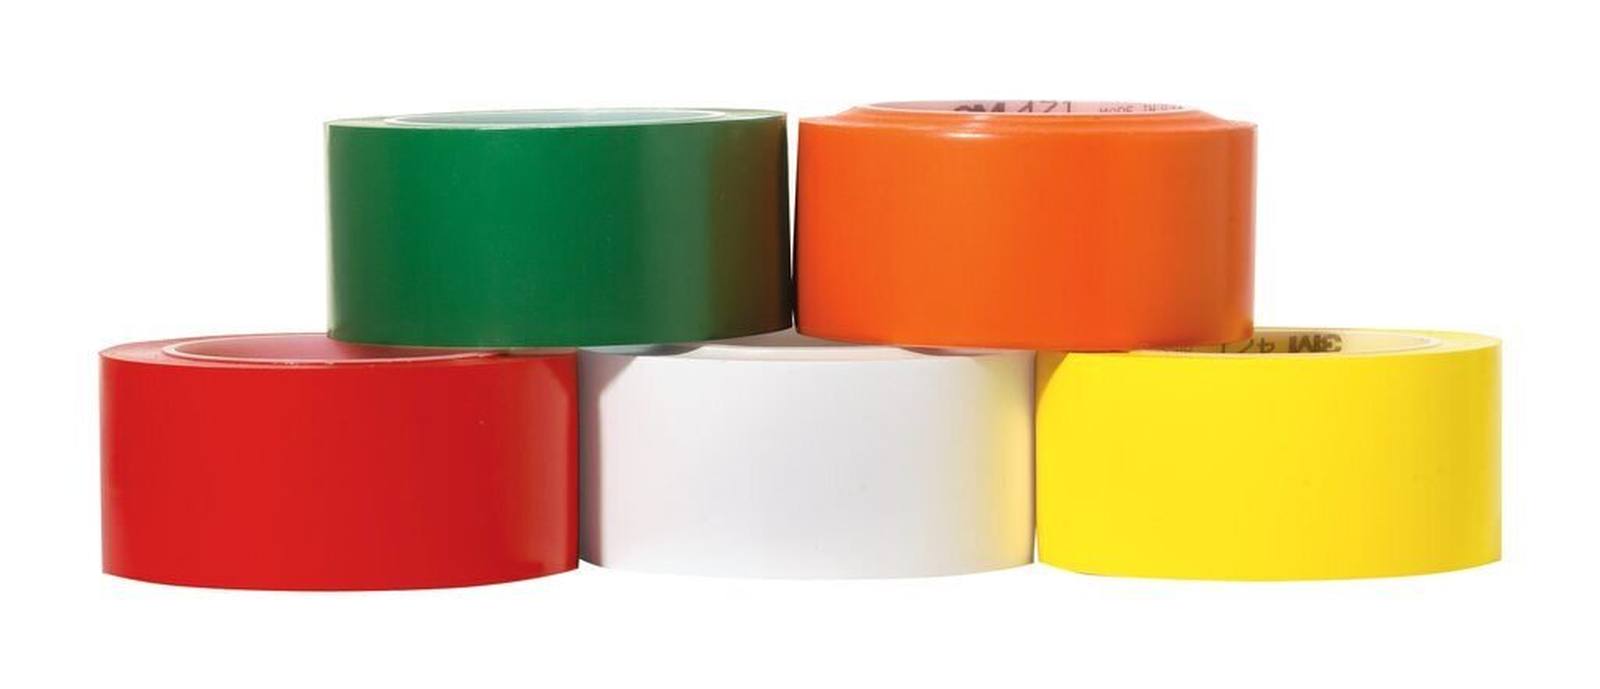 3M soft PVC adhesive tape 471 F, red, 19 mm x 33 m, 0.13 mm